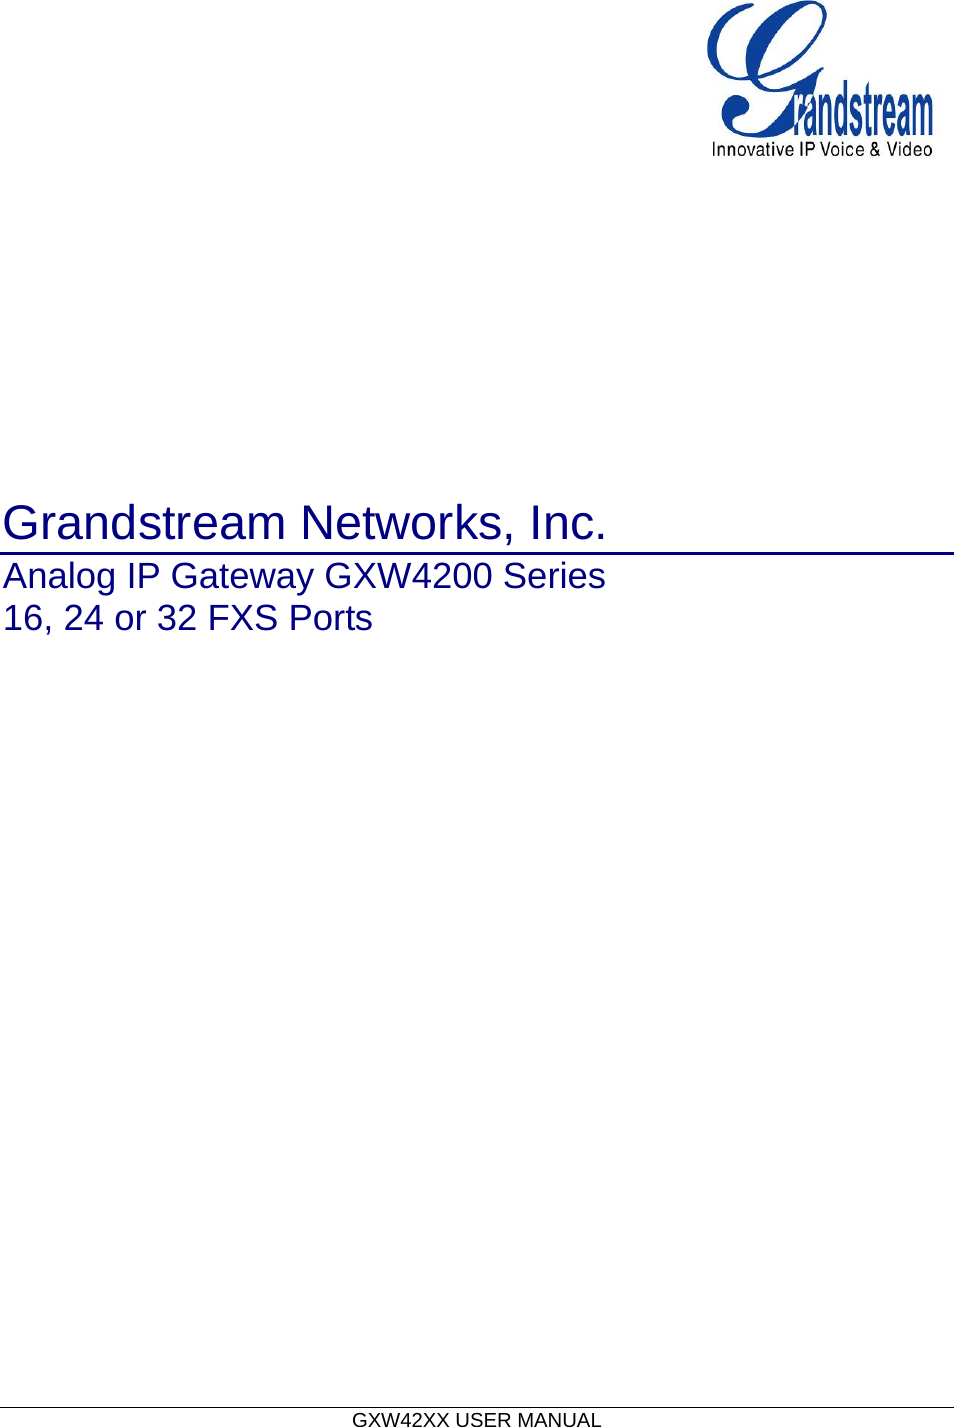  GXW42XX USER MANUAL                                                   Grandstream Networks, Inc. Analog IP Gateway GXW4200 Series 16, 24 or 32 FXS Ports                    